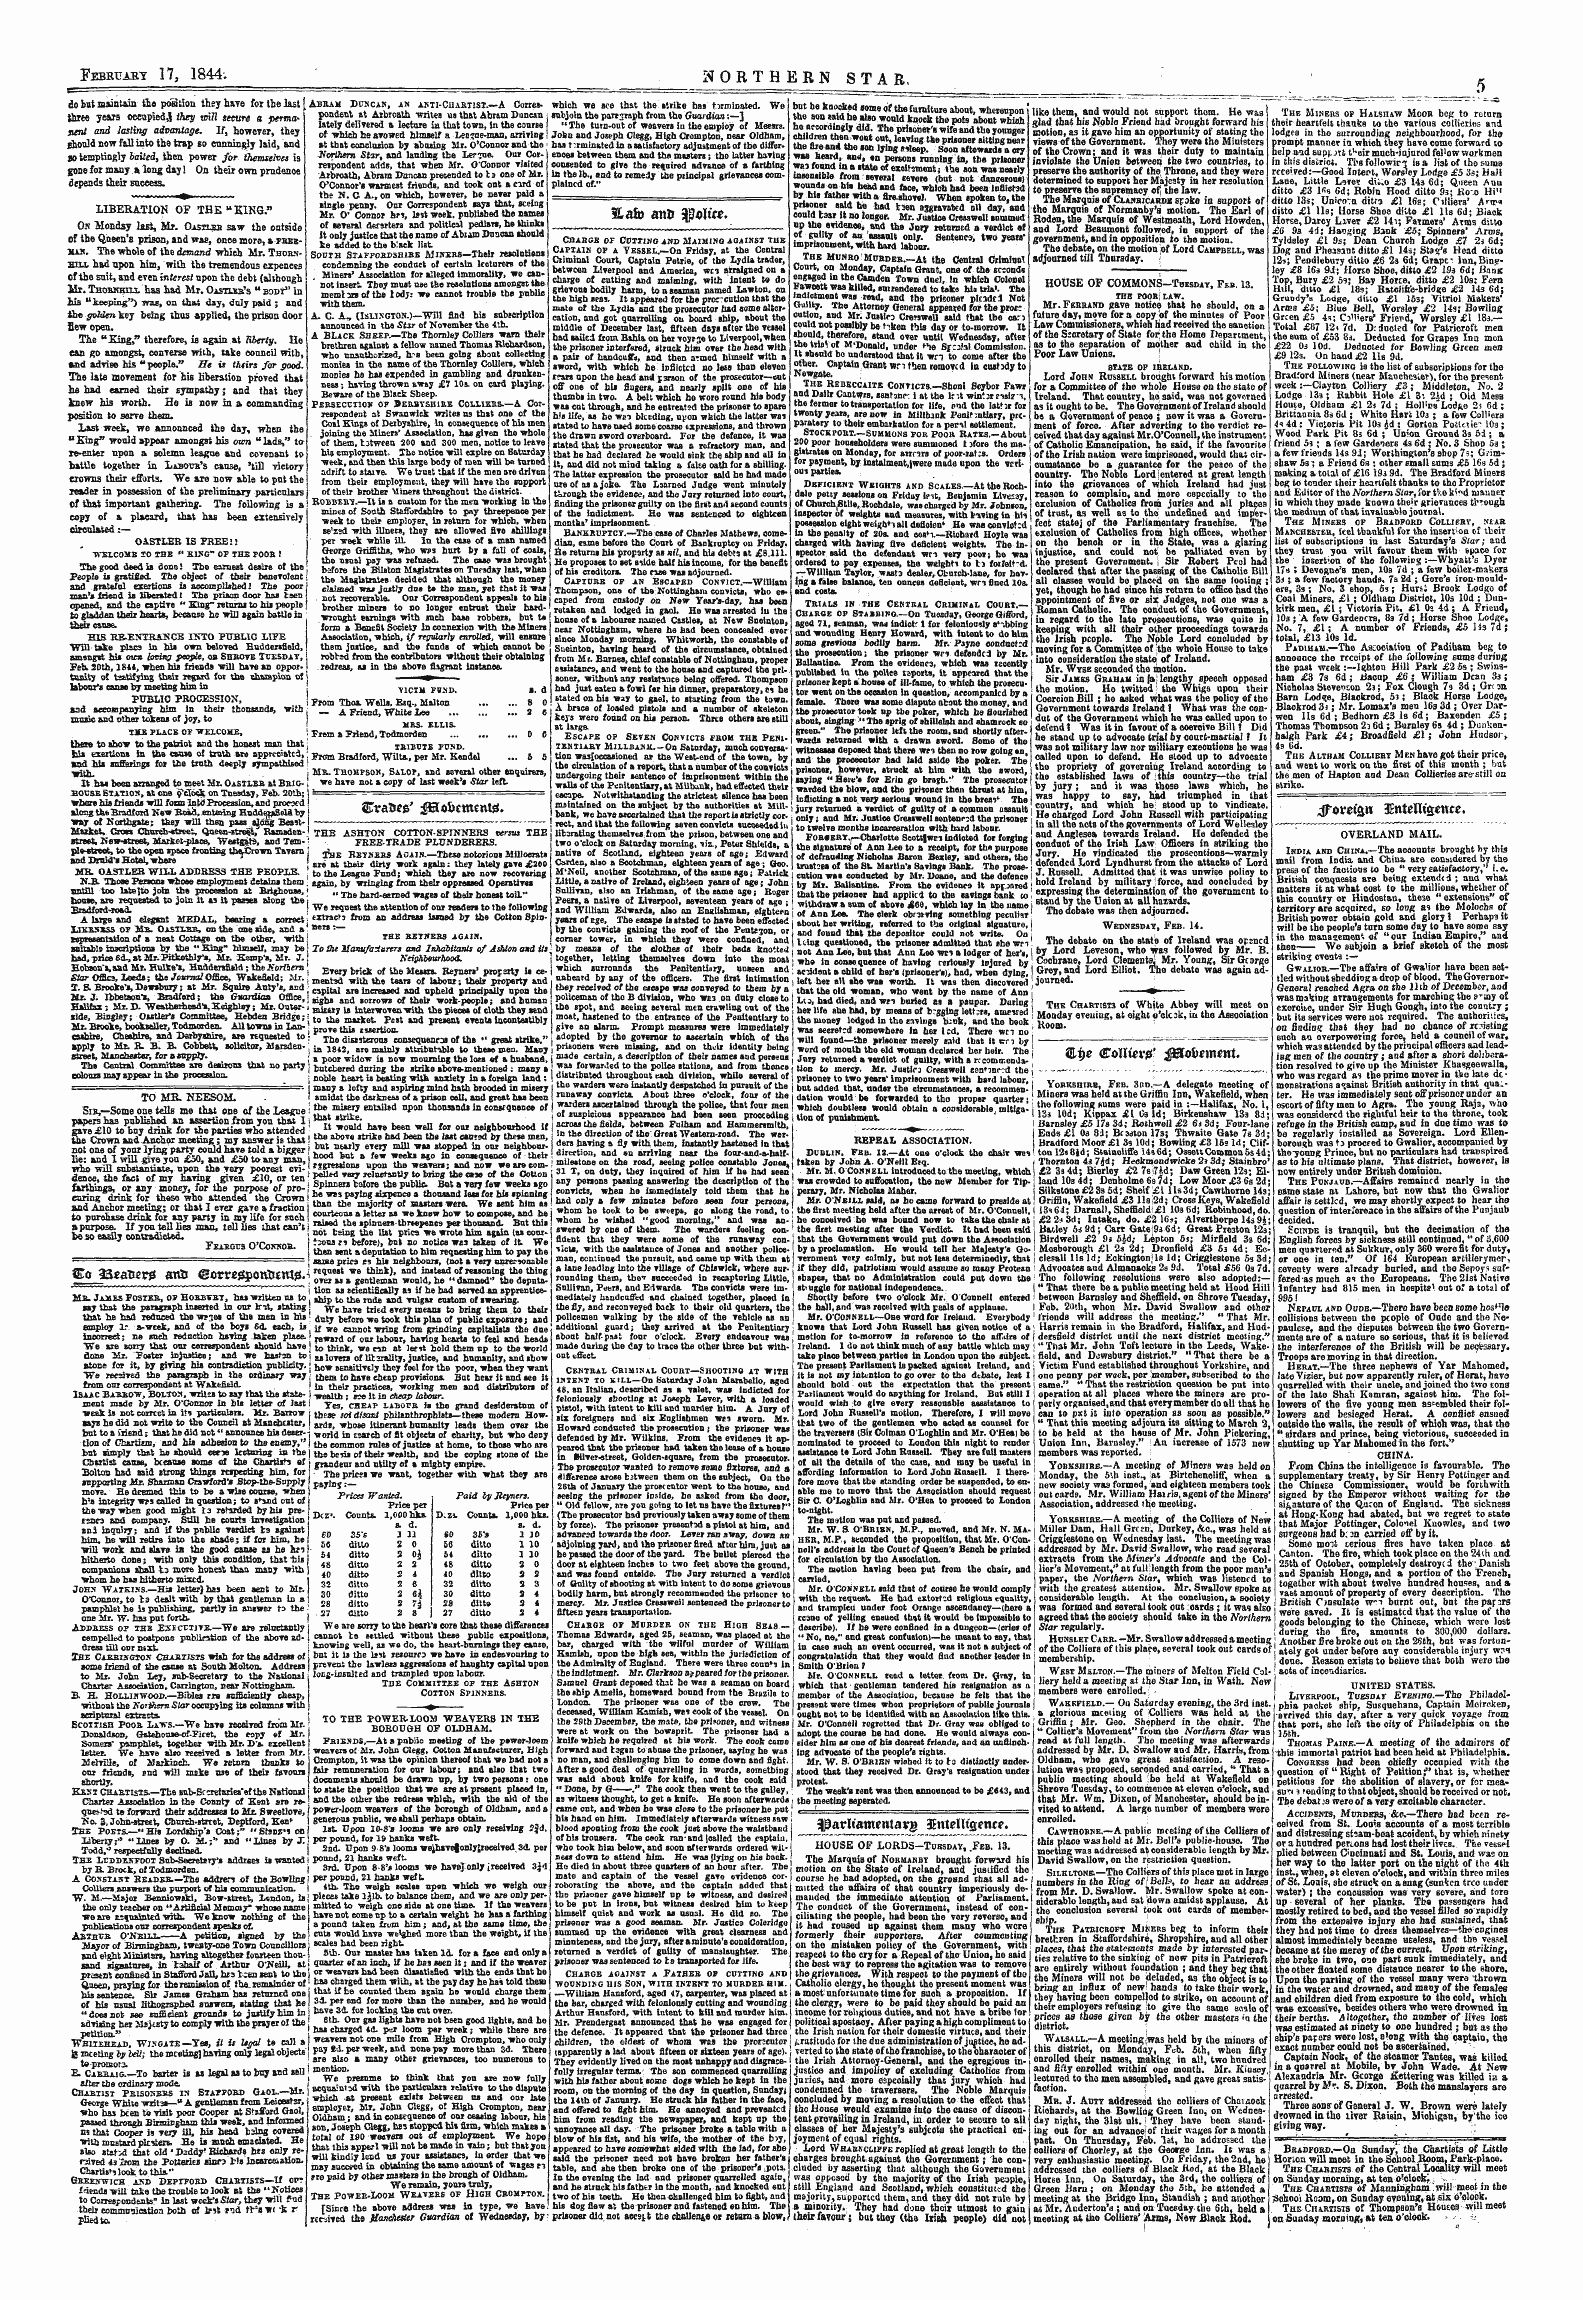 Northern Star (1837-1852): jS F Y, 1st edition - 3la&) Antr Police*